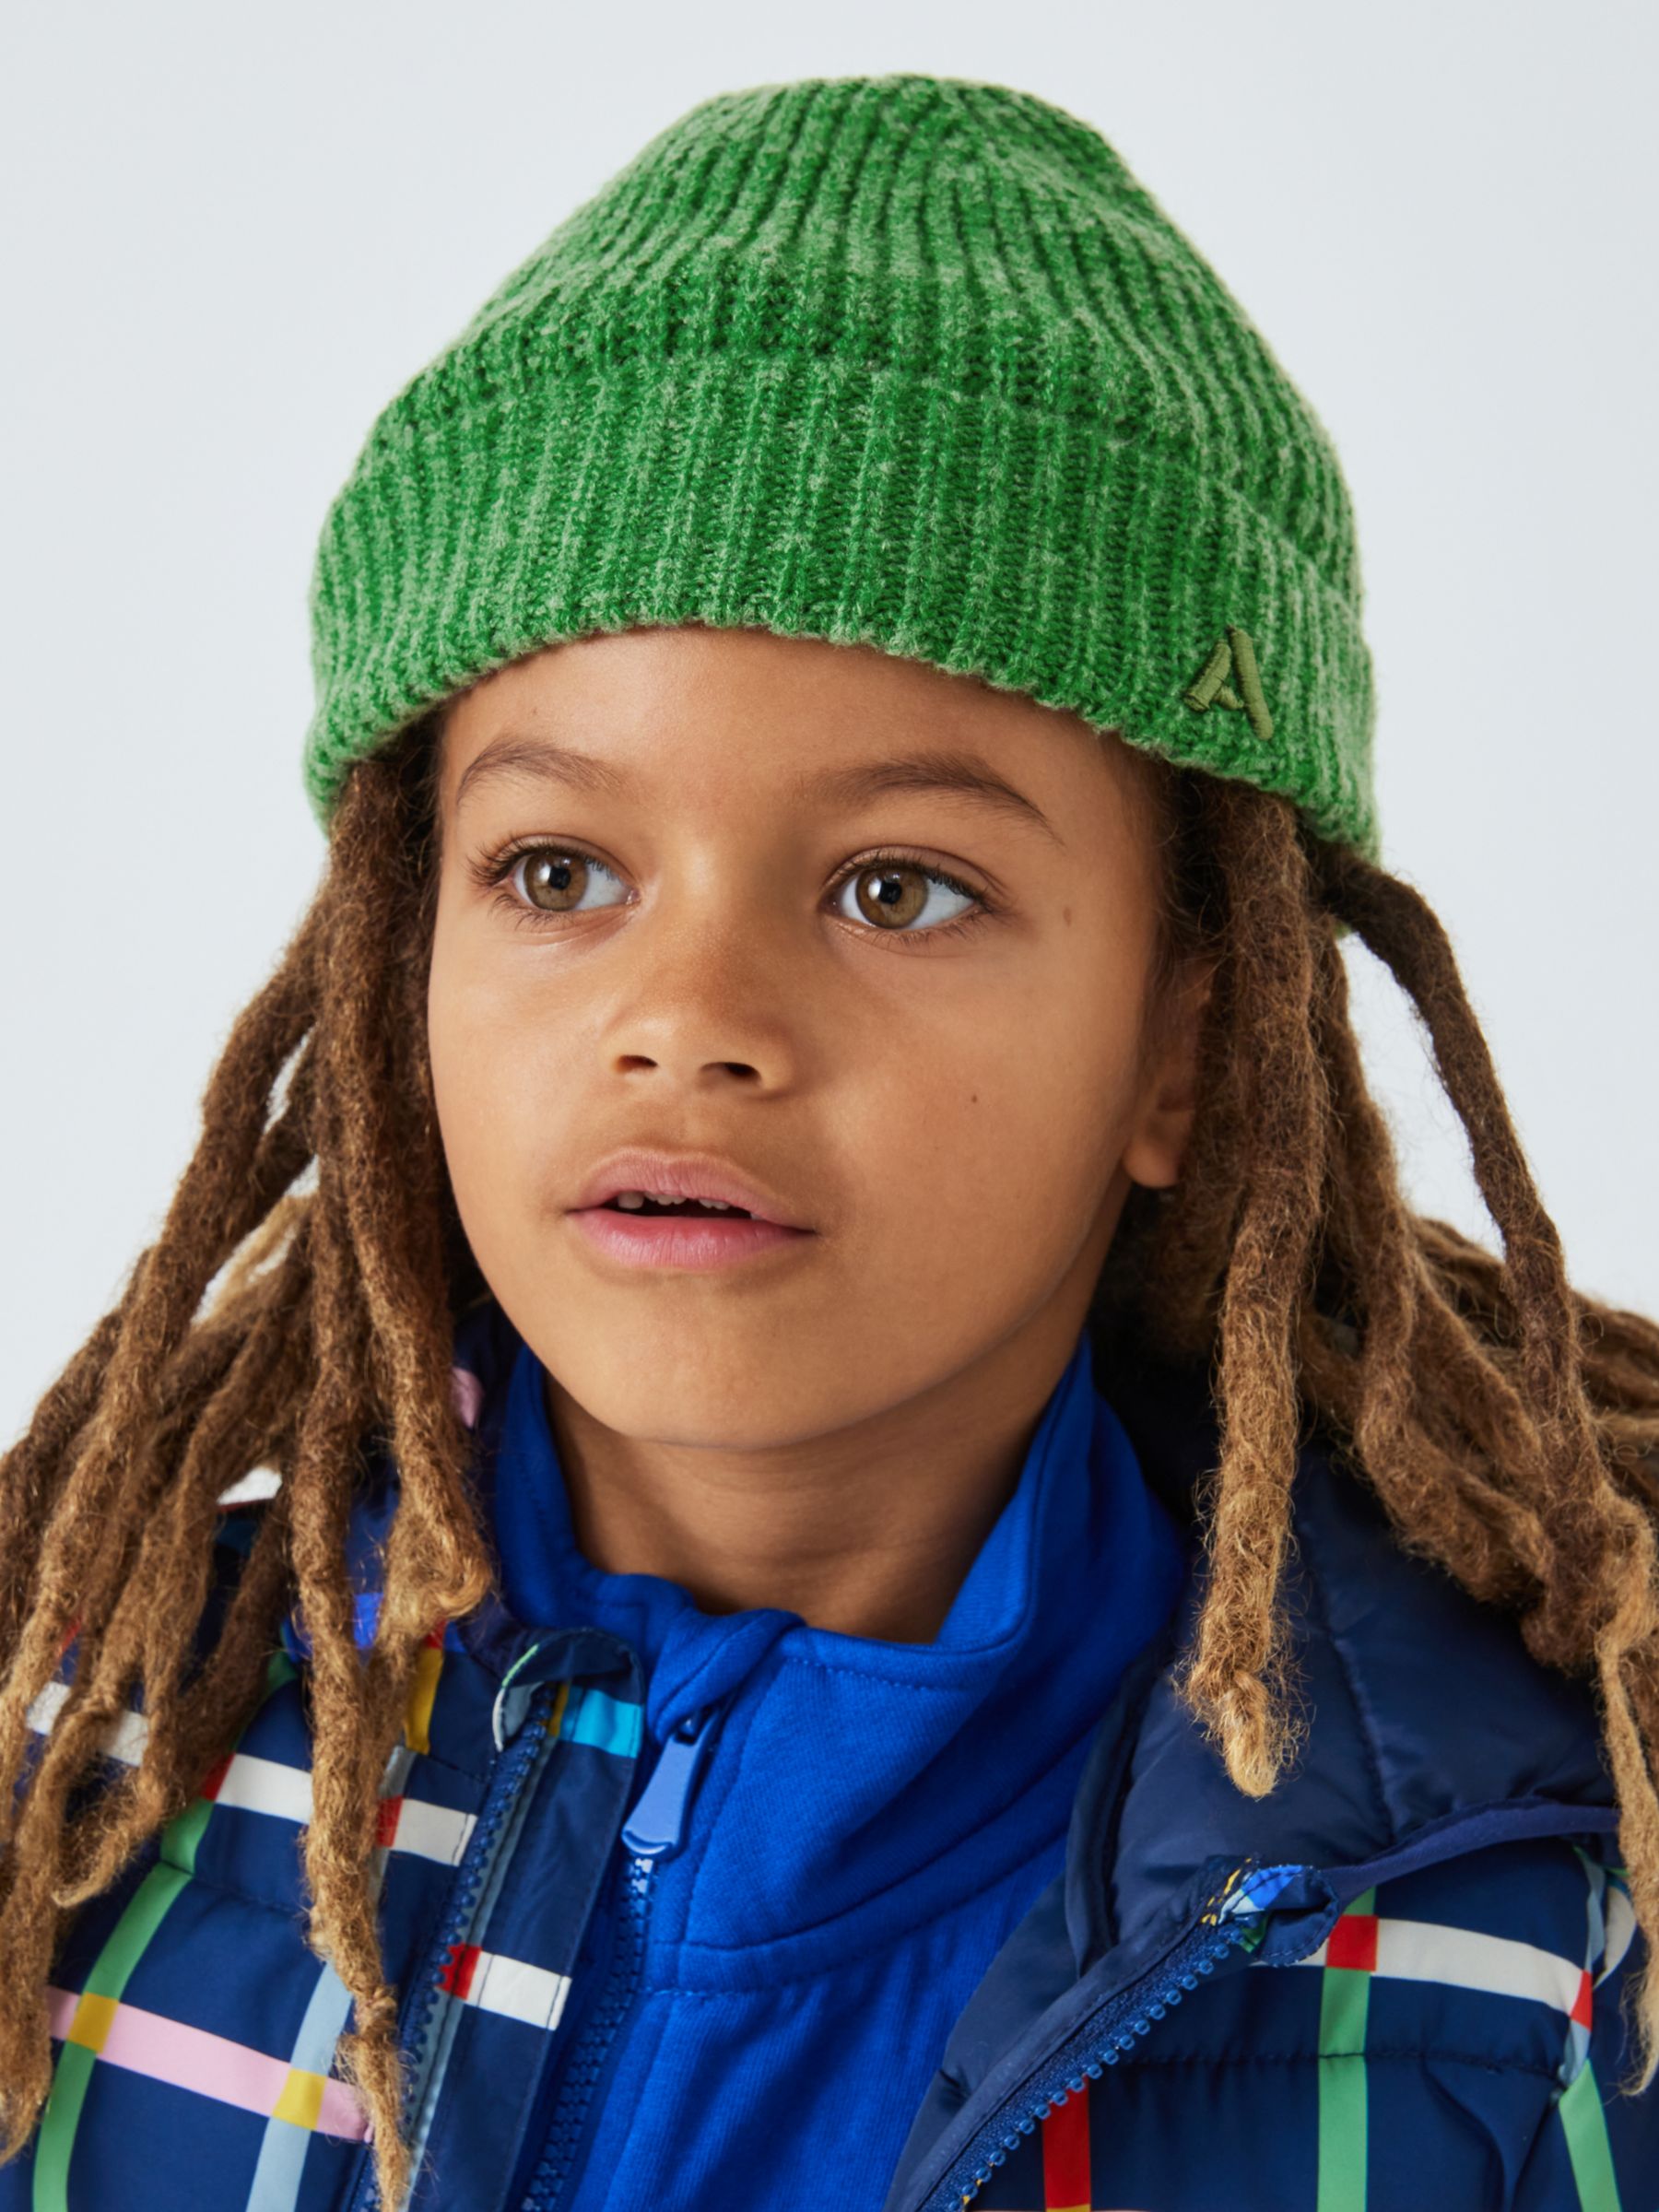 John Lewis ANYDAY Kids' Knitted Snood, Green at John Lewis & Partners